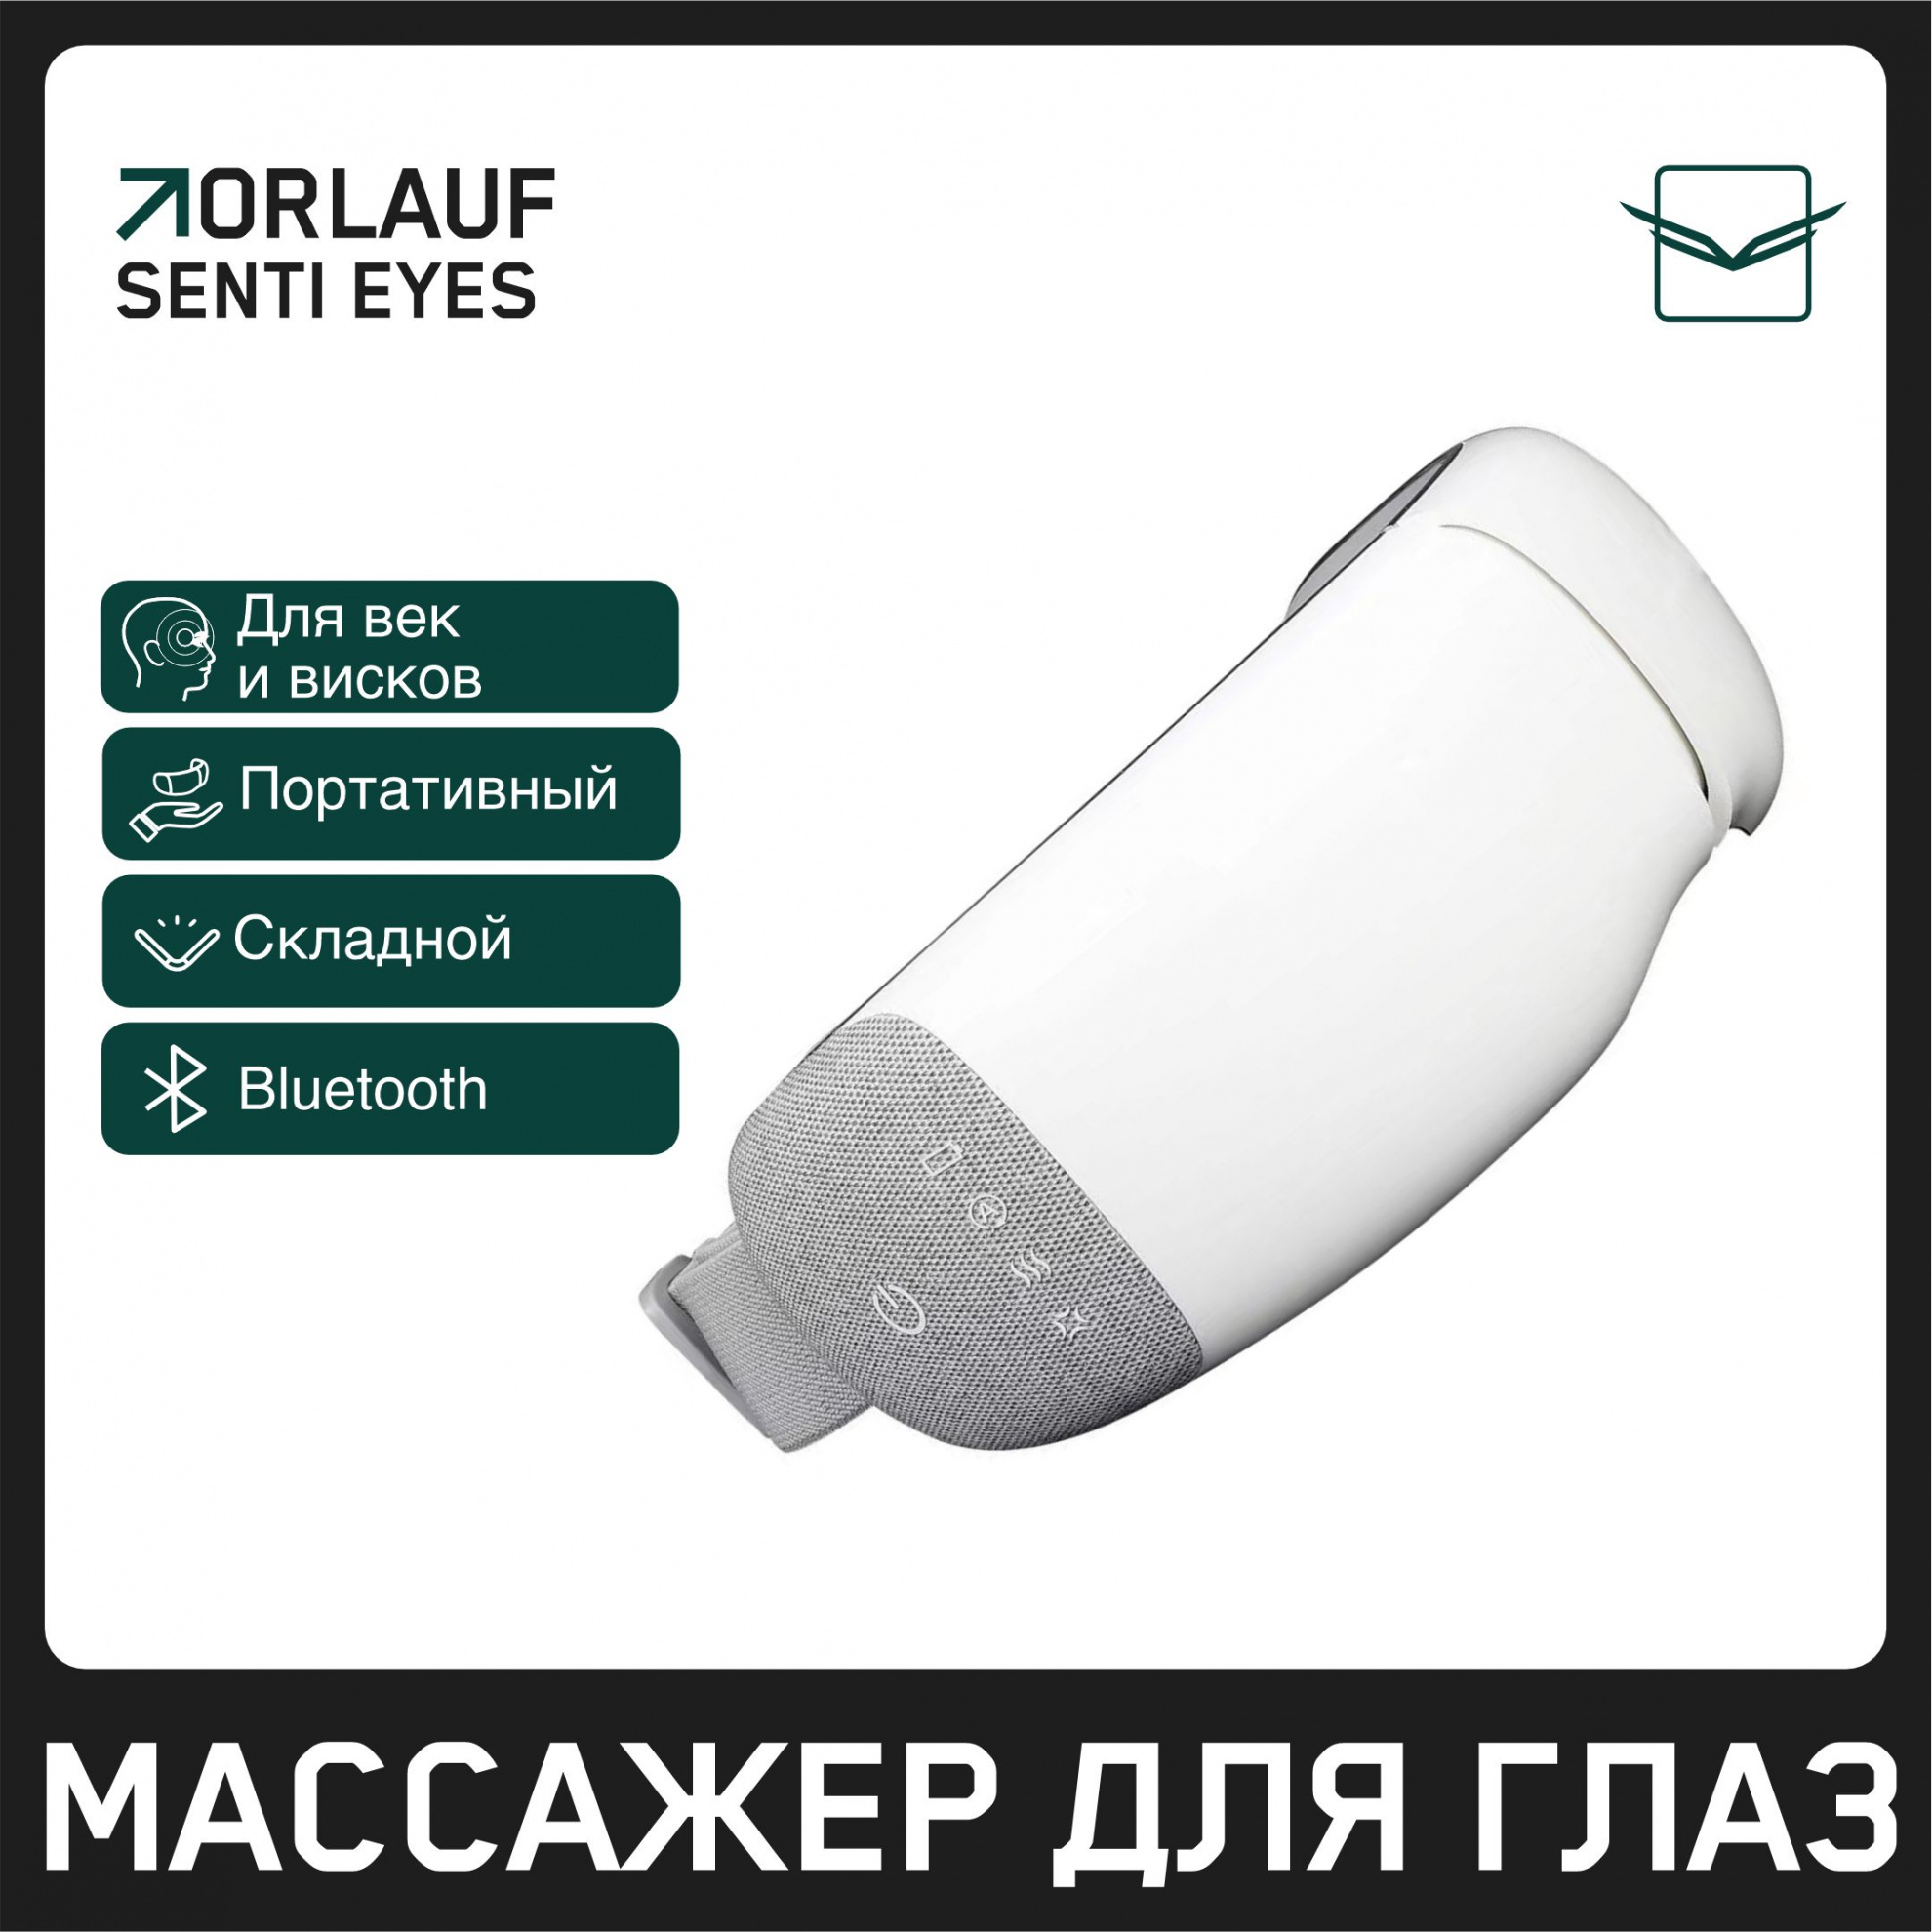 Senti Eyes в Омске по цене 9400 ₽ в категории каталог Orlauf